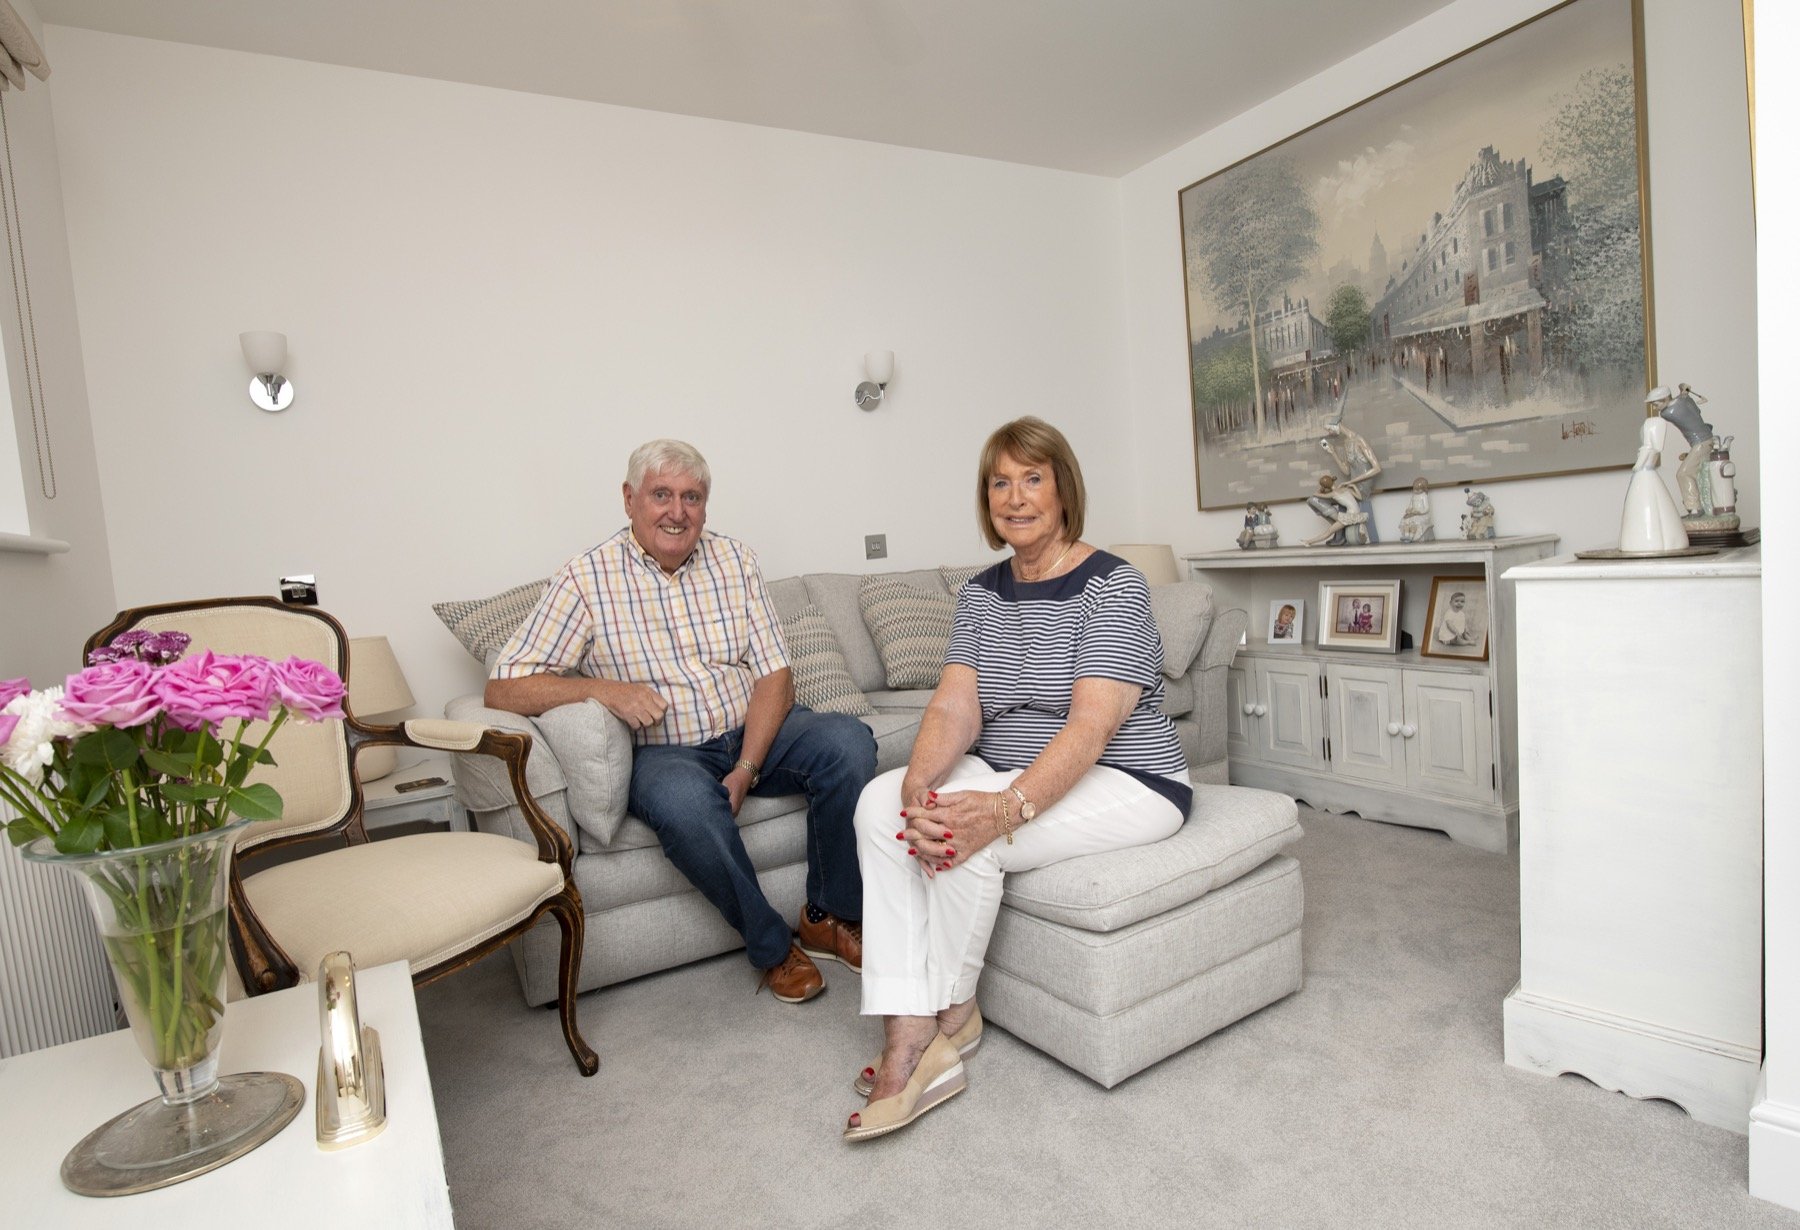 John and Elizabeth Turner have embraced active adult living at Sanctuary Wilmslow